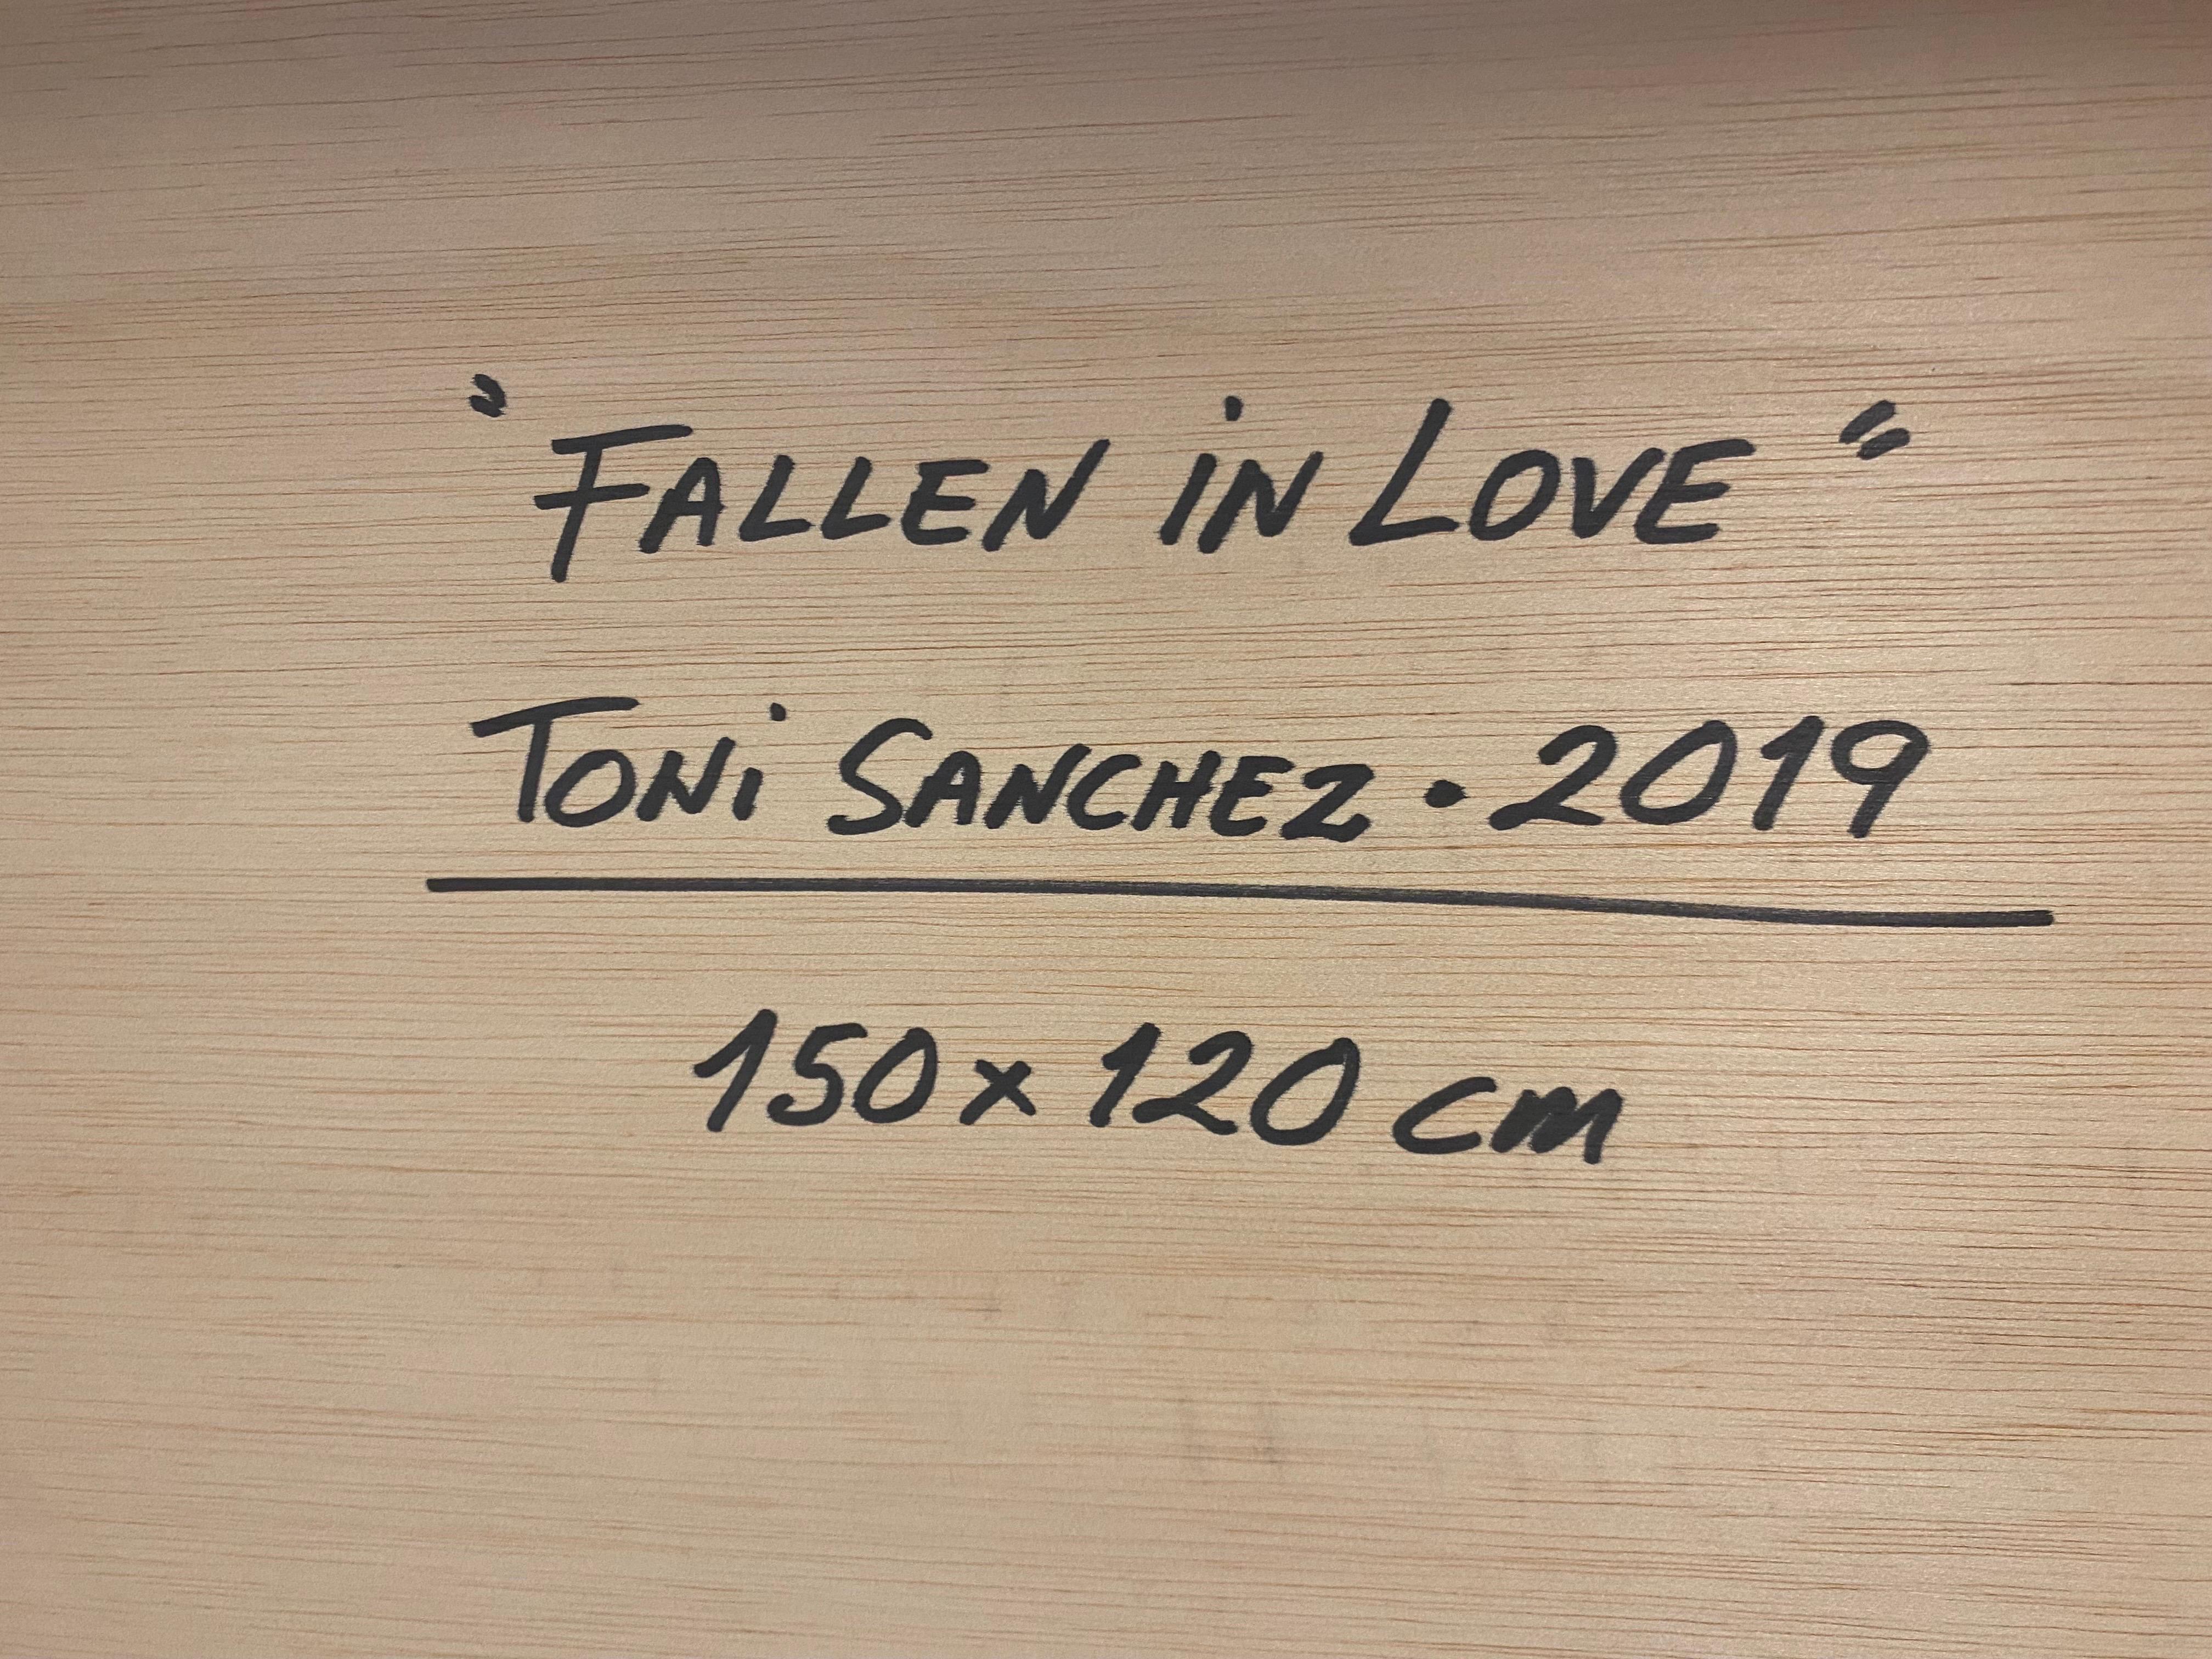 Fallen In Love
Acrylic on canvas
150 x 120 cm
2019